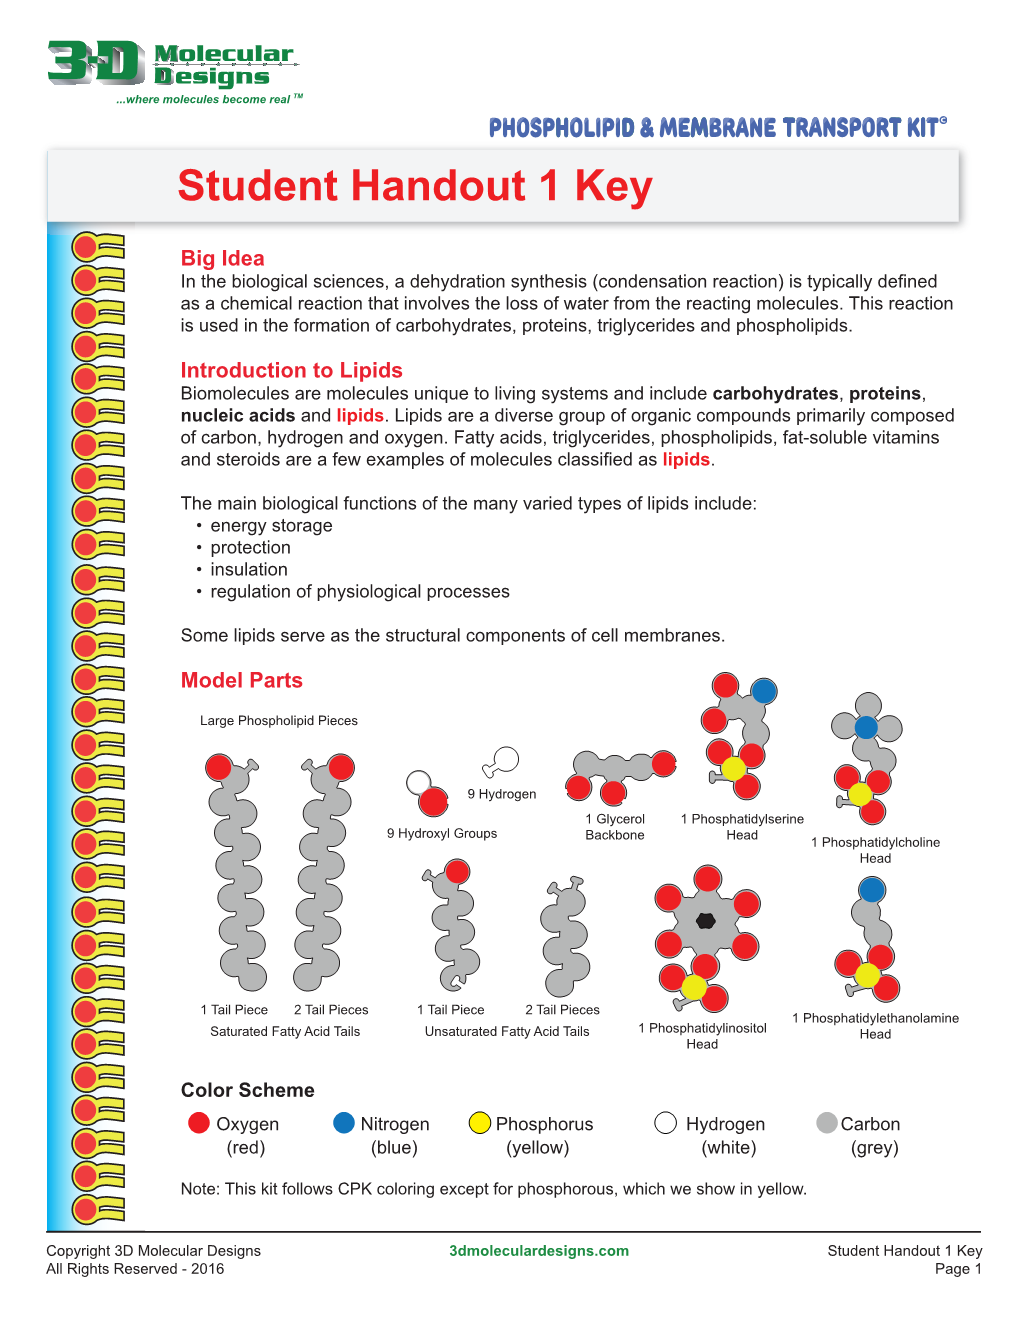 Student Handout 1 Key